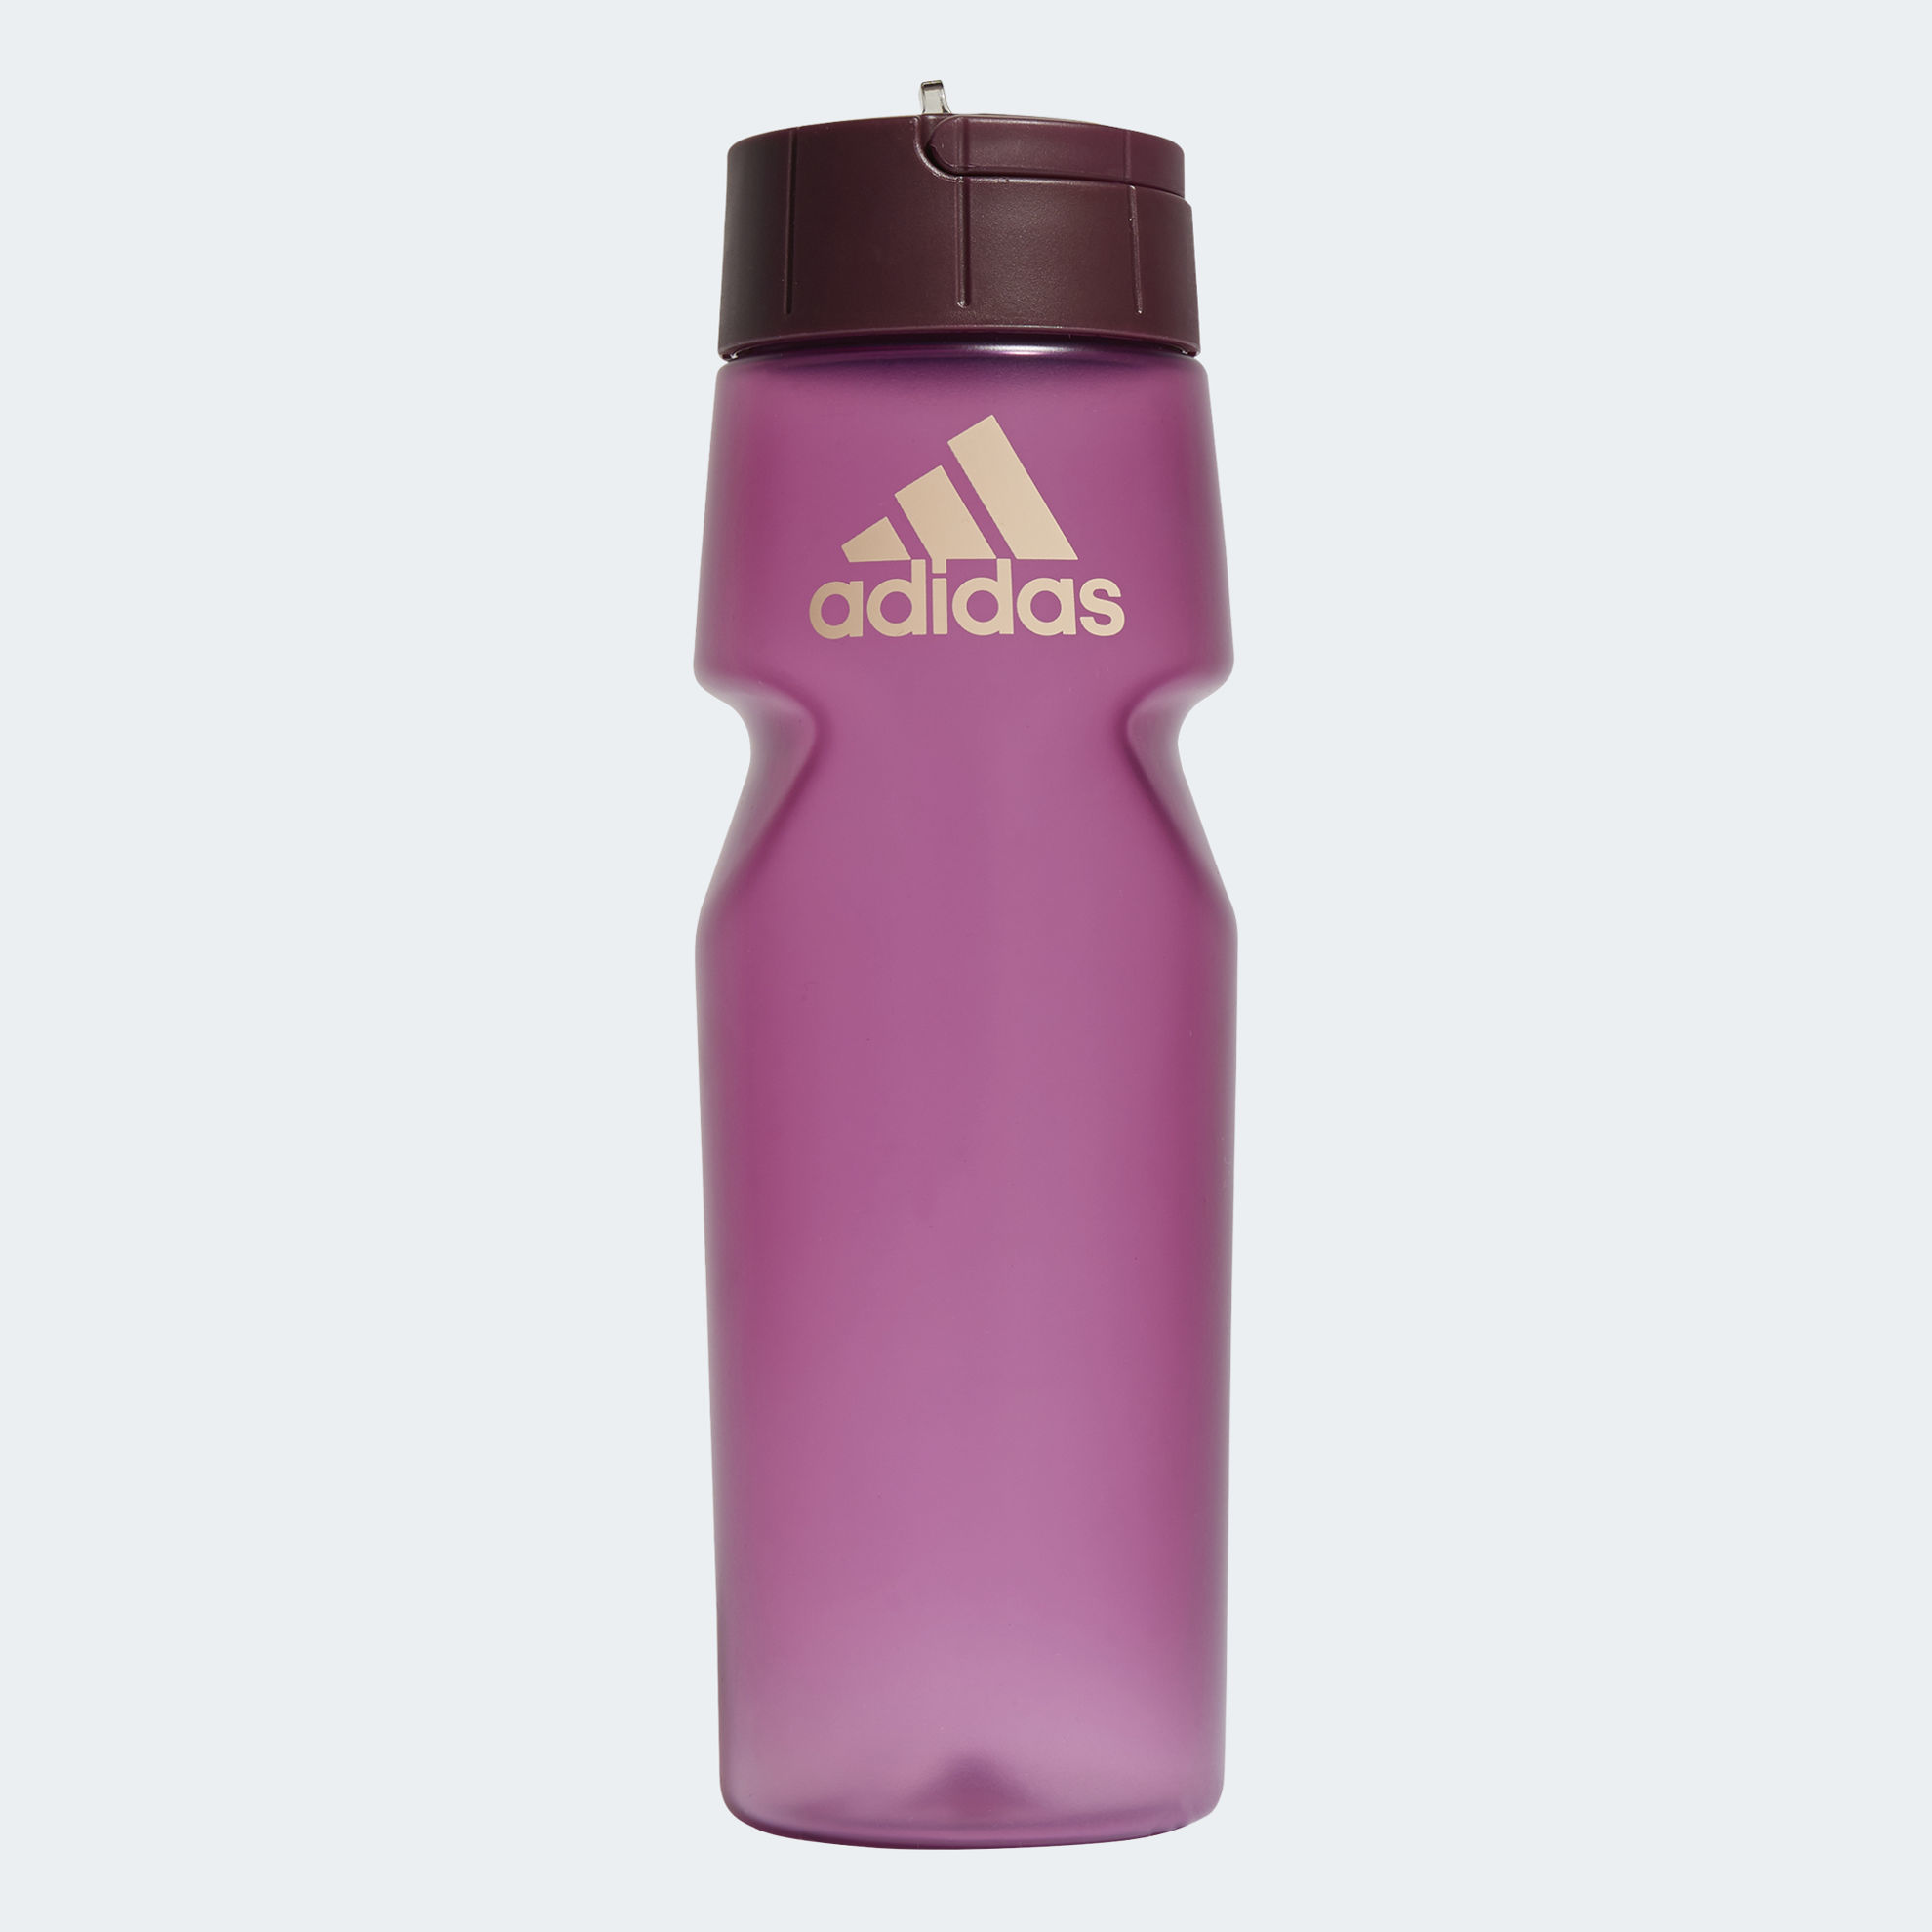 adidas sipper 750 ml water bottles